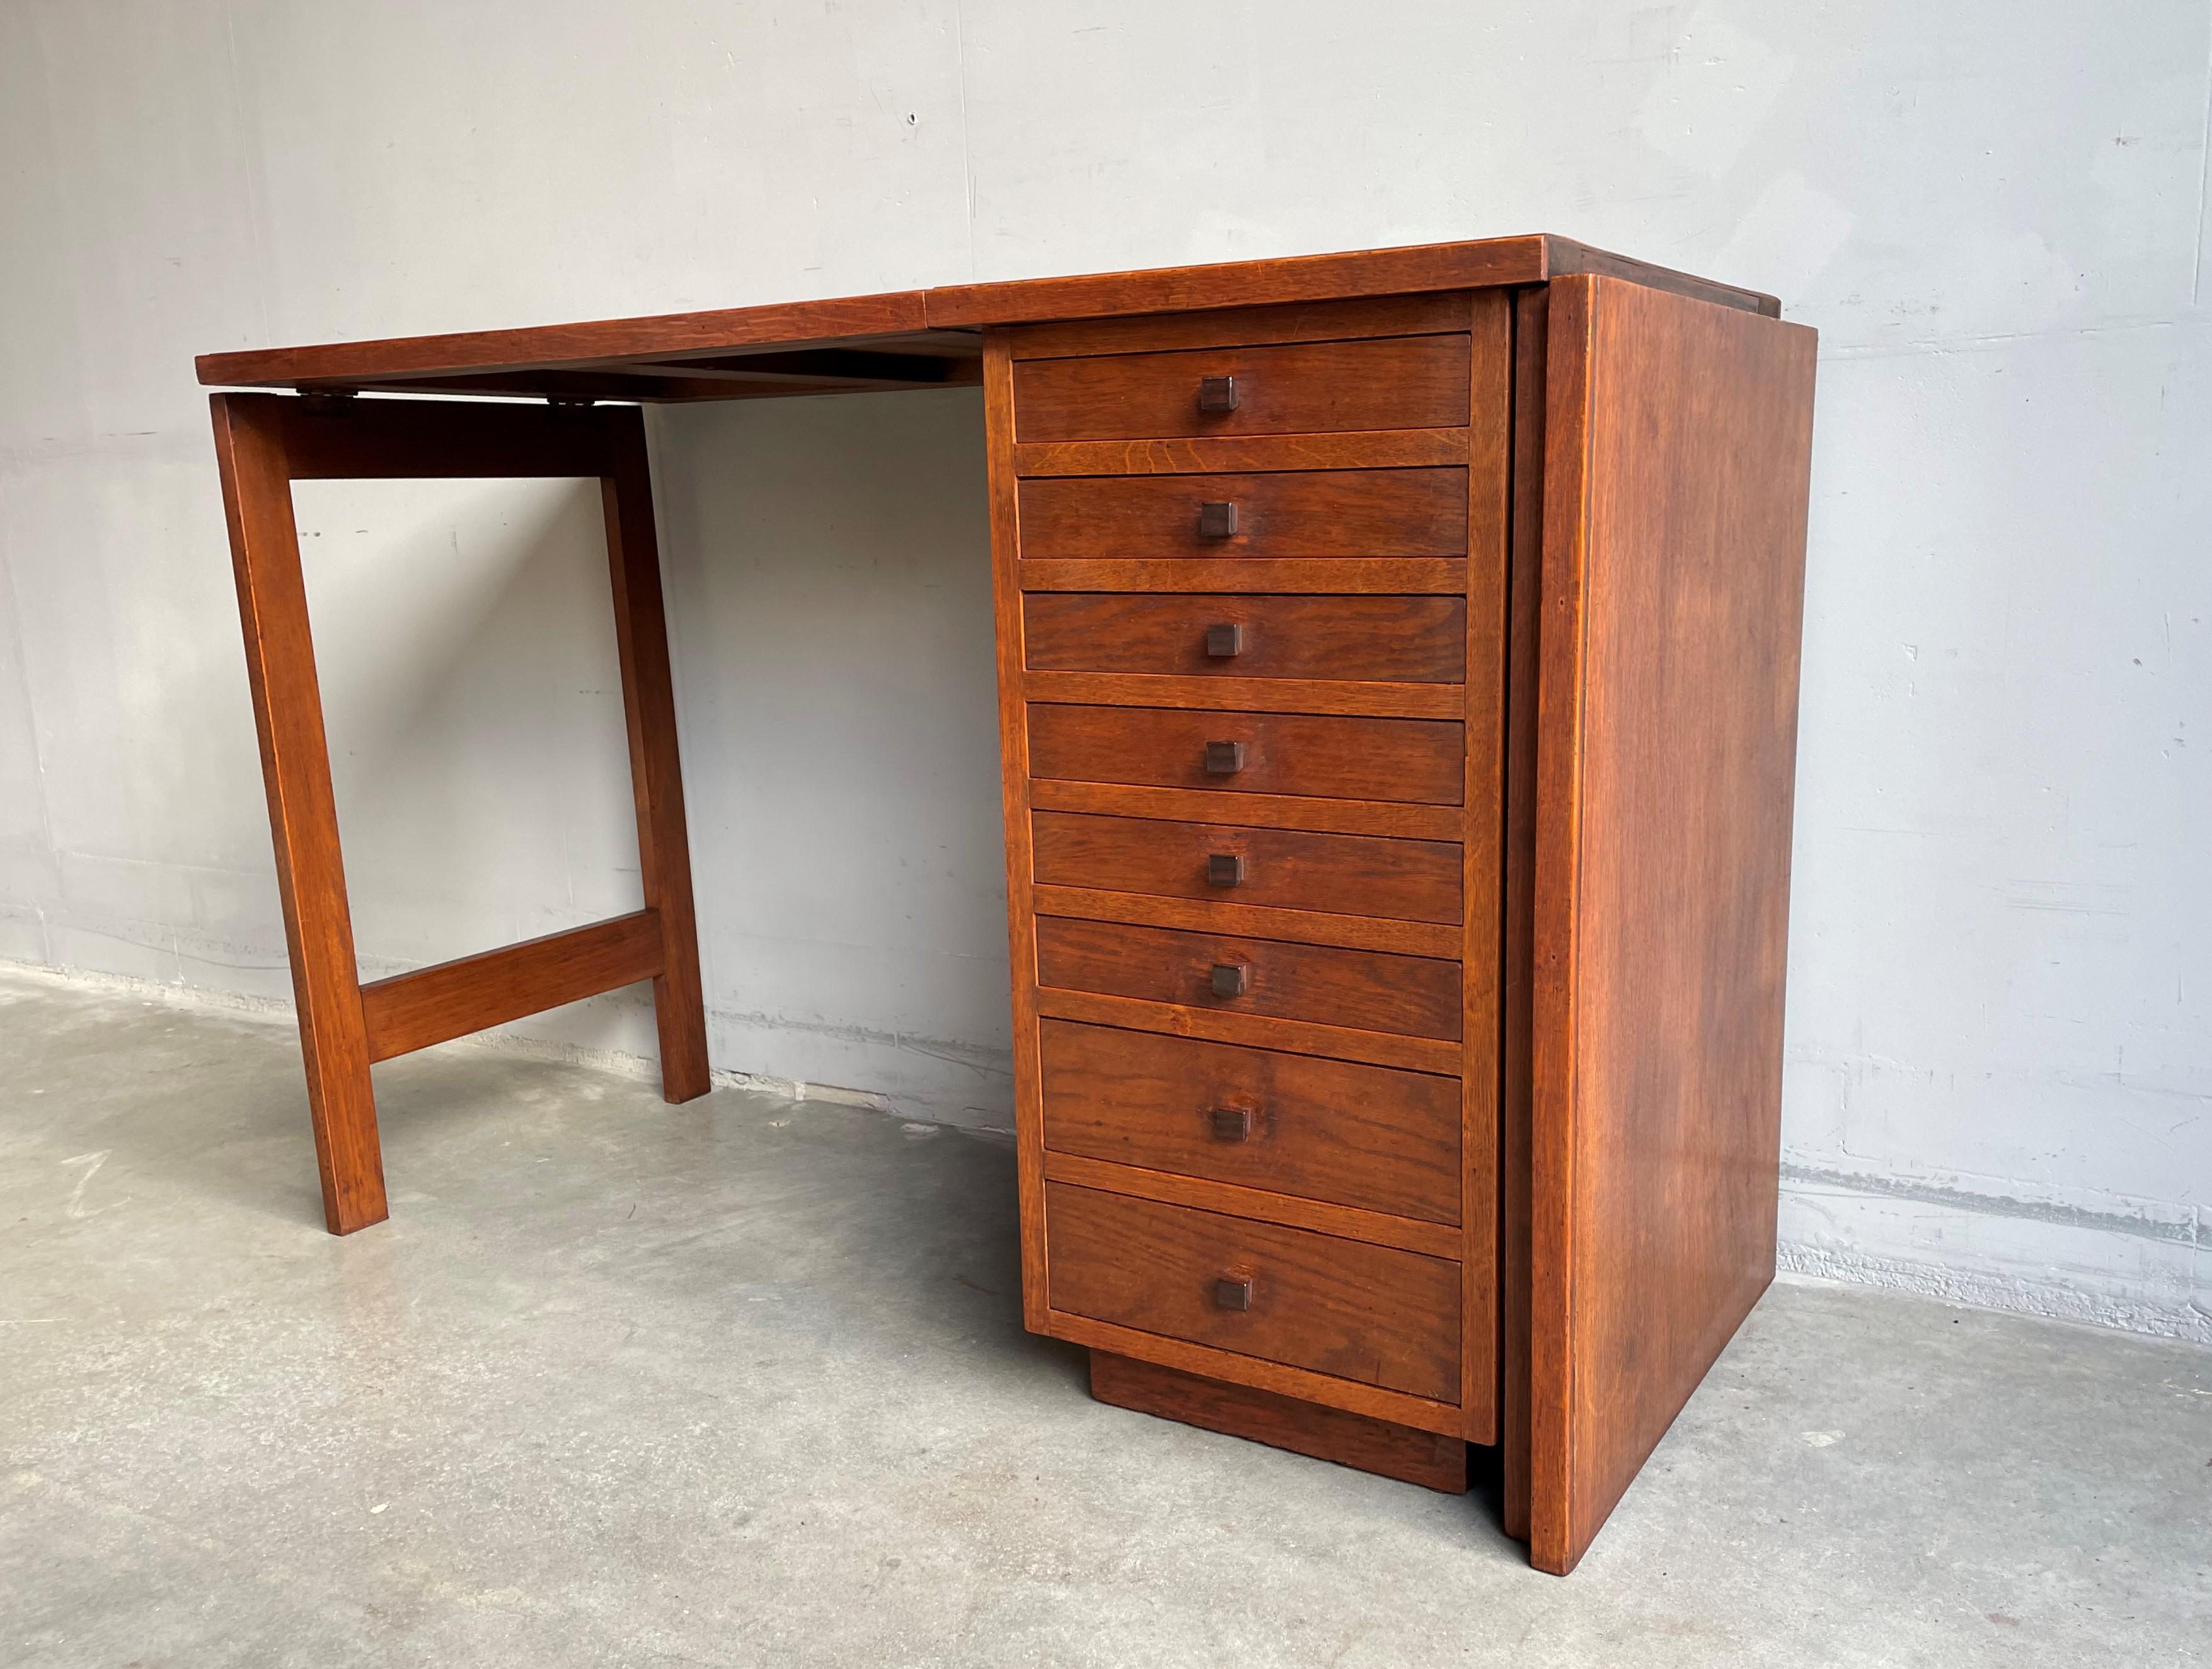 Unique Dutch Arts & Crafts Oak Partners Desk and Filing Cabinet Into One, 1910s 2